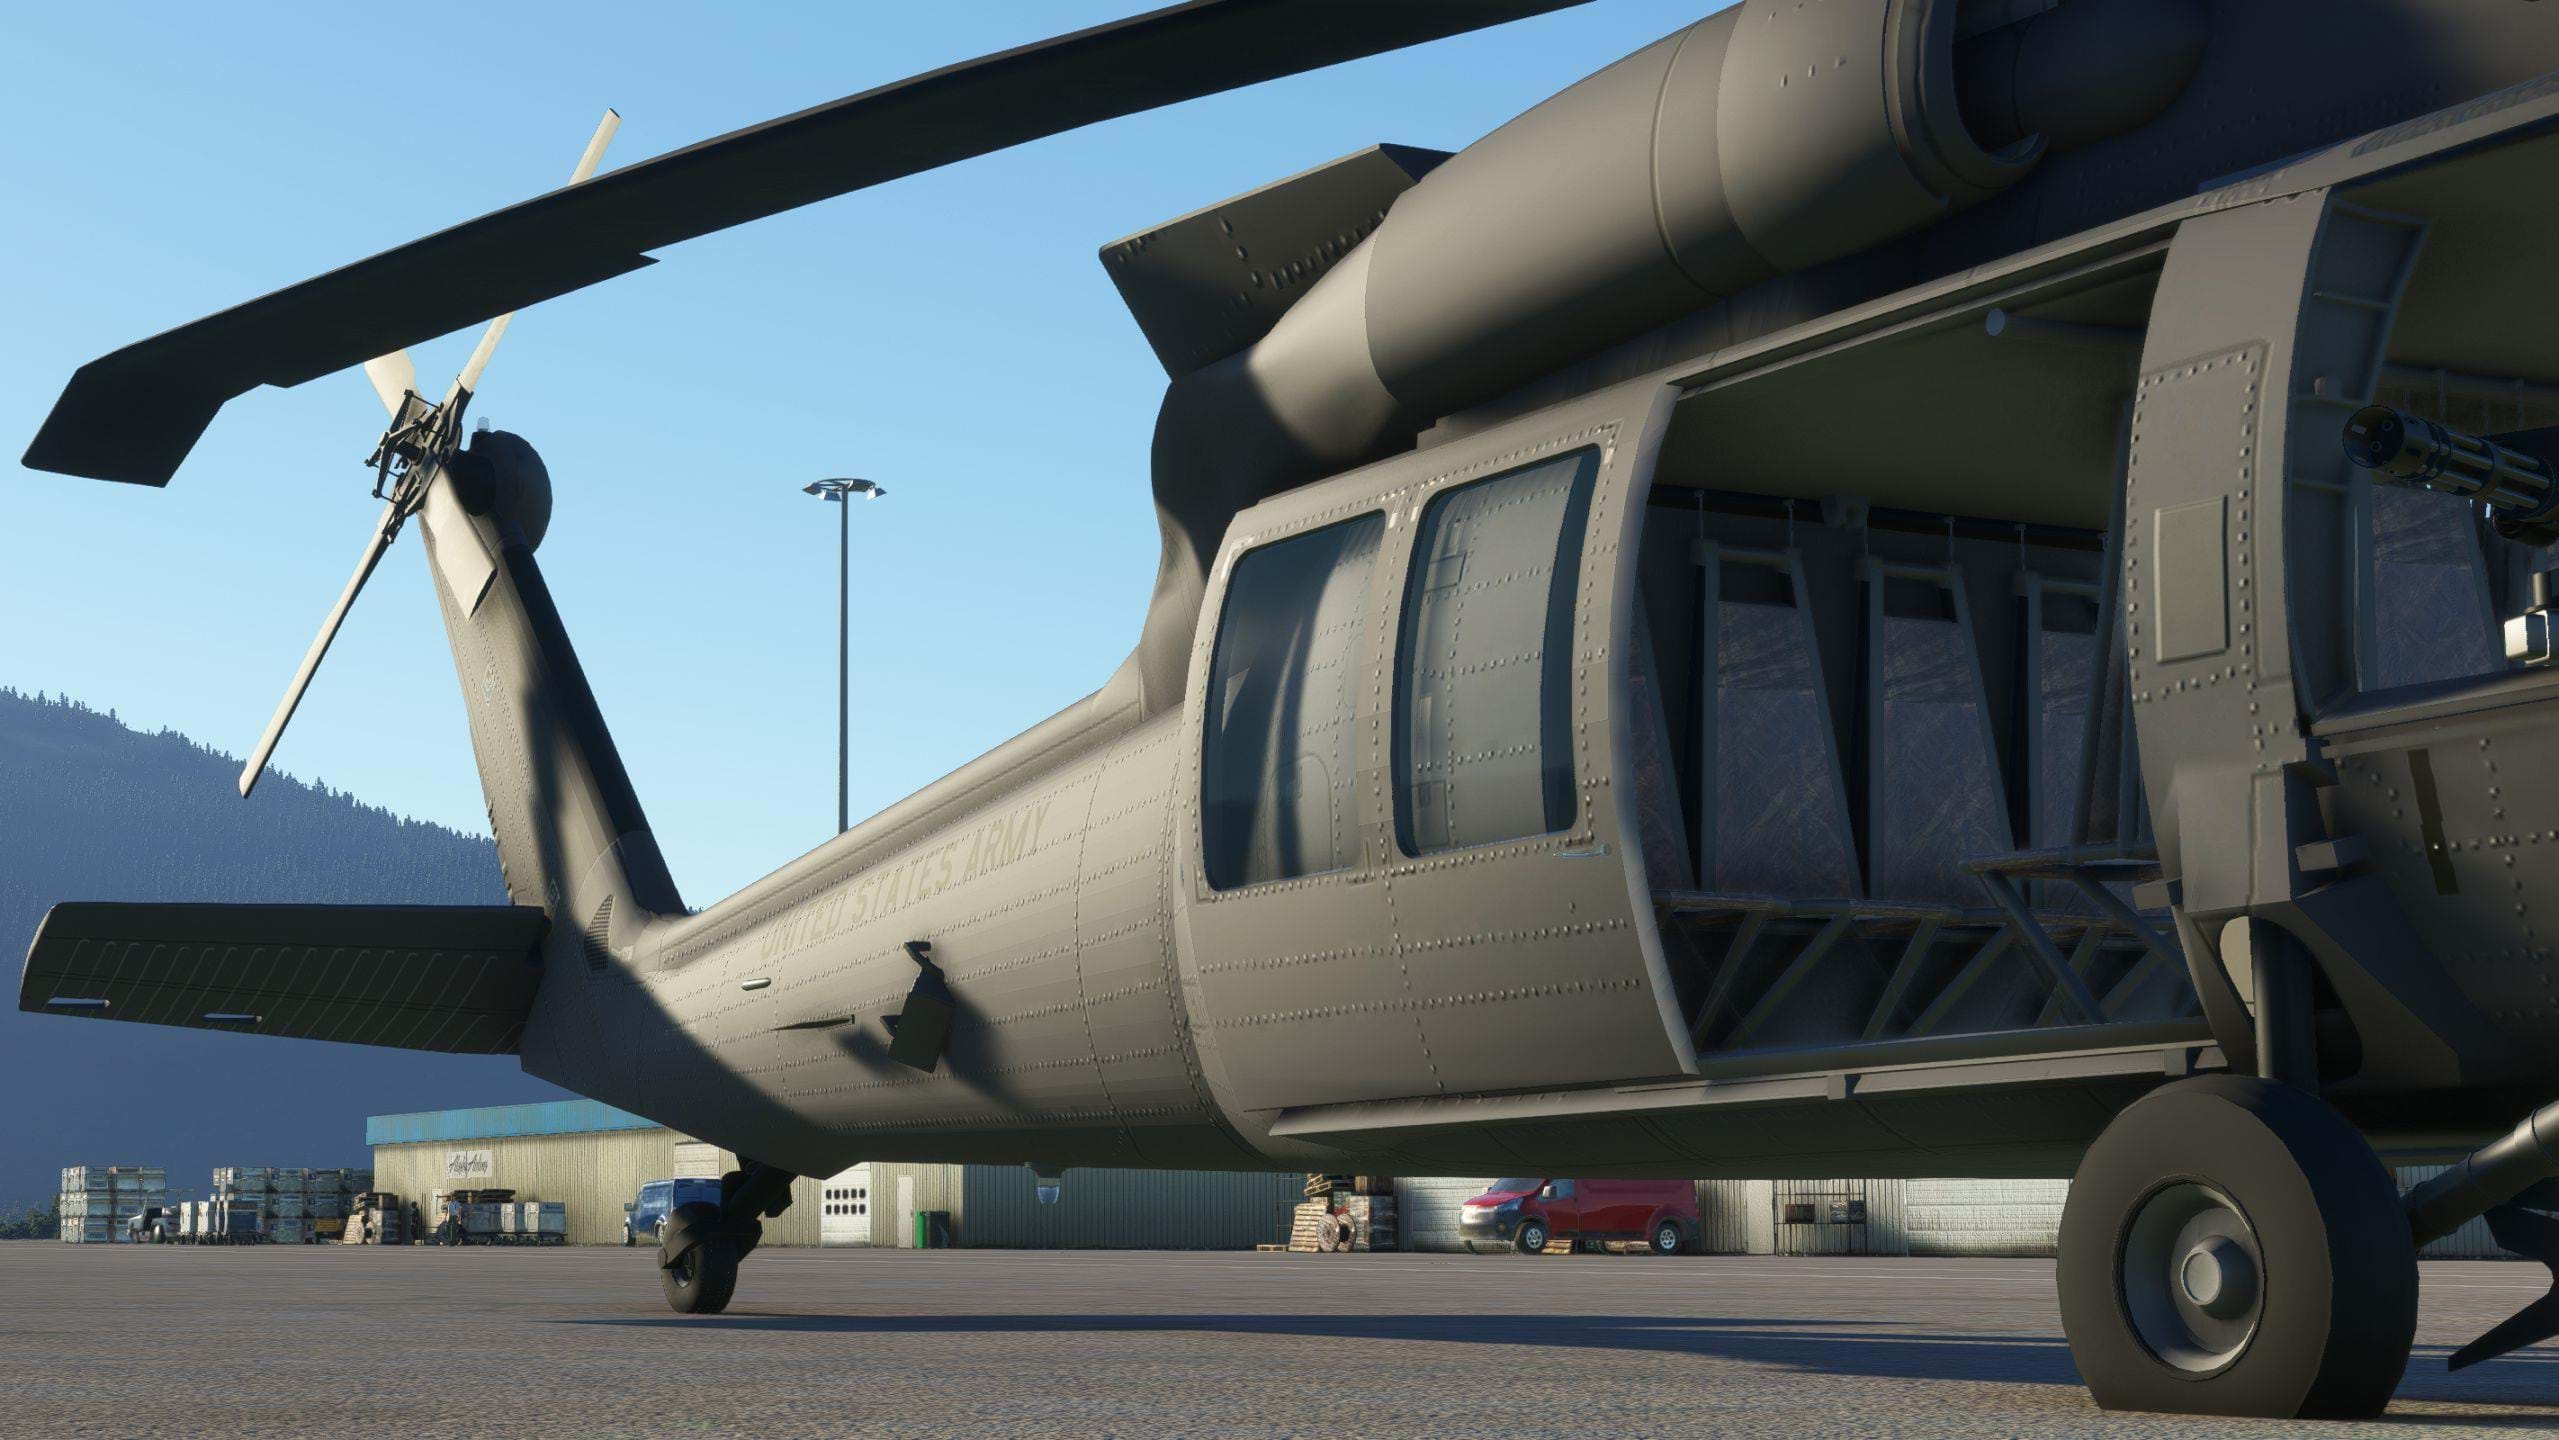 Destroyer121 UH-60 Black Hawk for Microsoft Flight Simulator